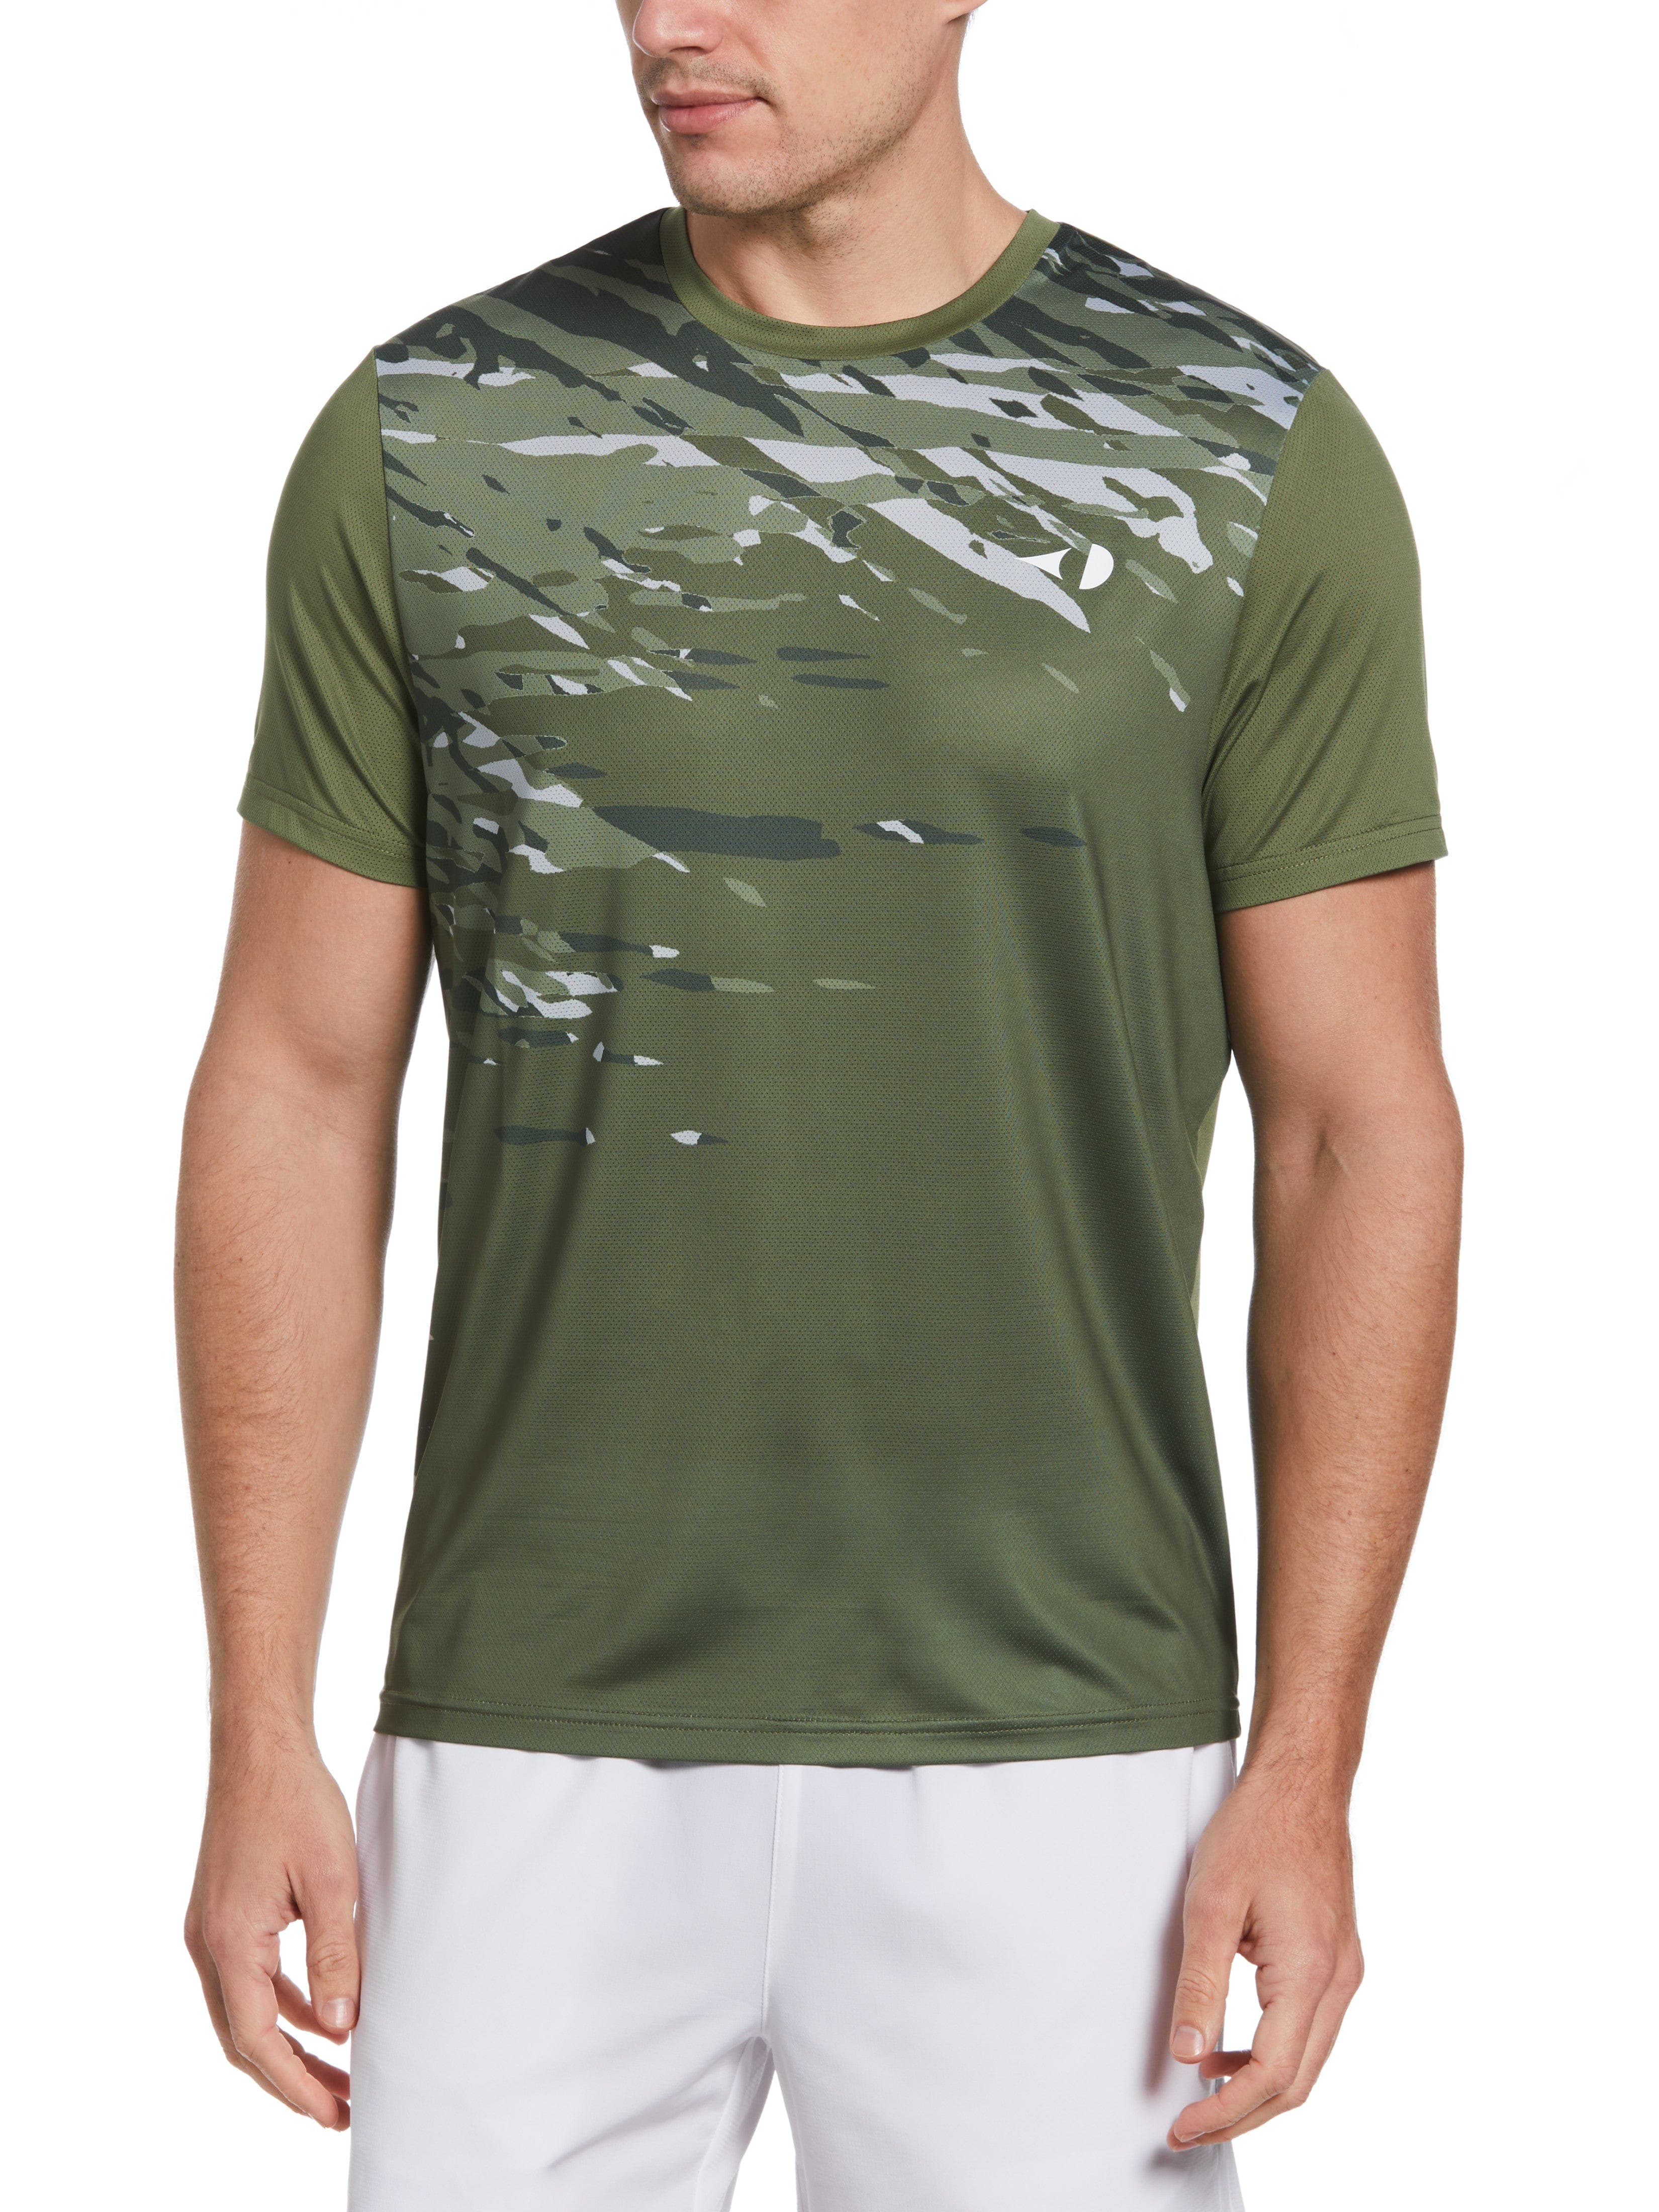 Grand Slam Mens Asymmetric Camo Print Tennis T-Shirt, Size XL, Olivine Green, Polyester/Spandex | Golf Apparel Shop